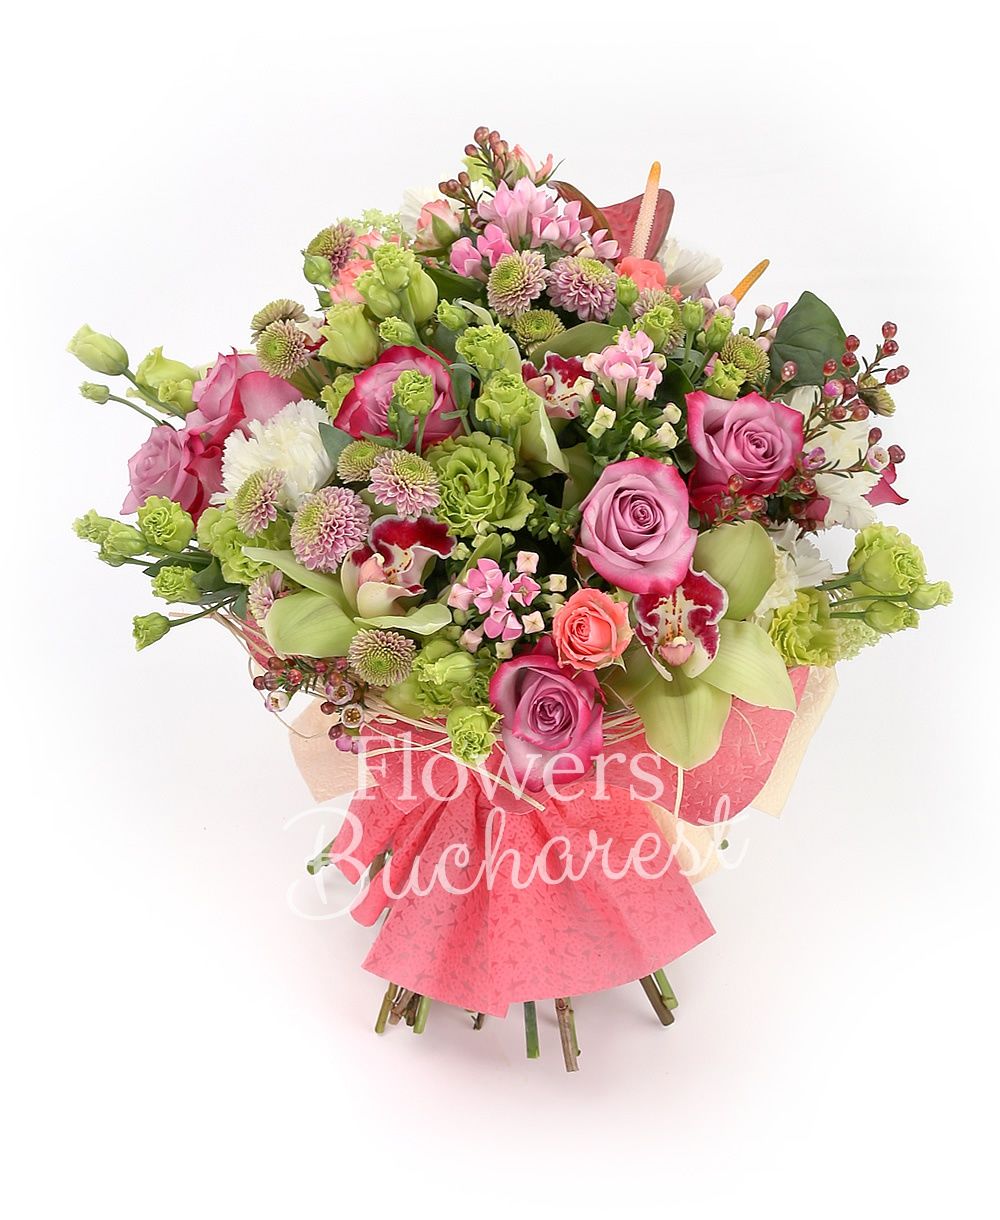 7 pink roses, 5 green lisianthus, 3 pink miniroses, 3 red anthurium, 5 white carnations, 5 pink santini, 3 pink bouvardia, green cymbidium, greenery